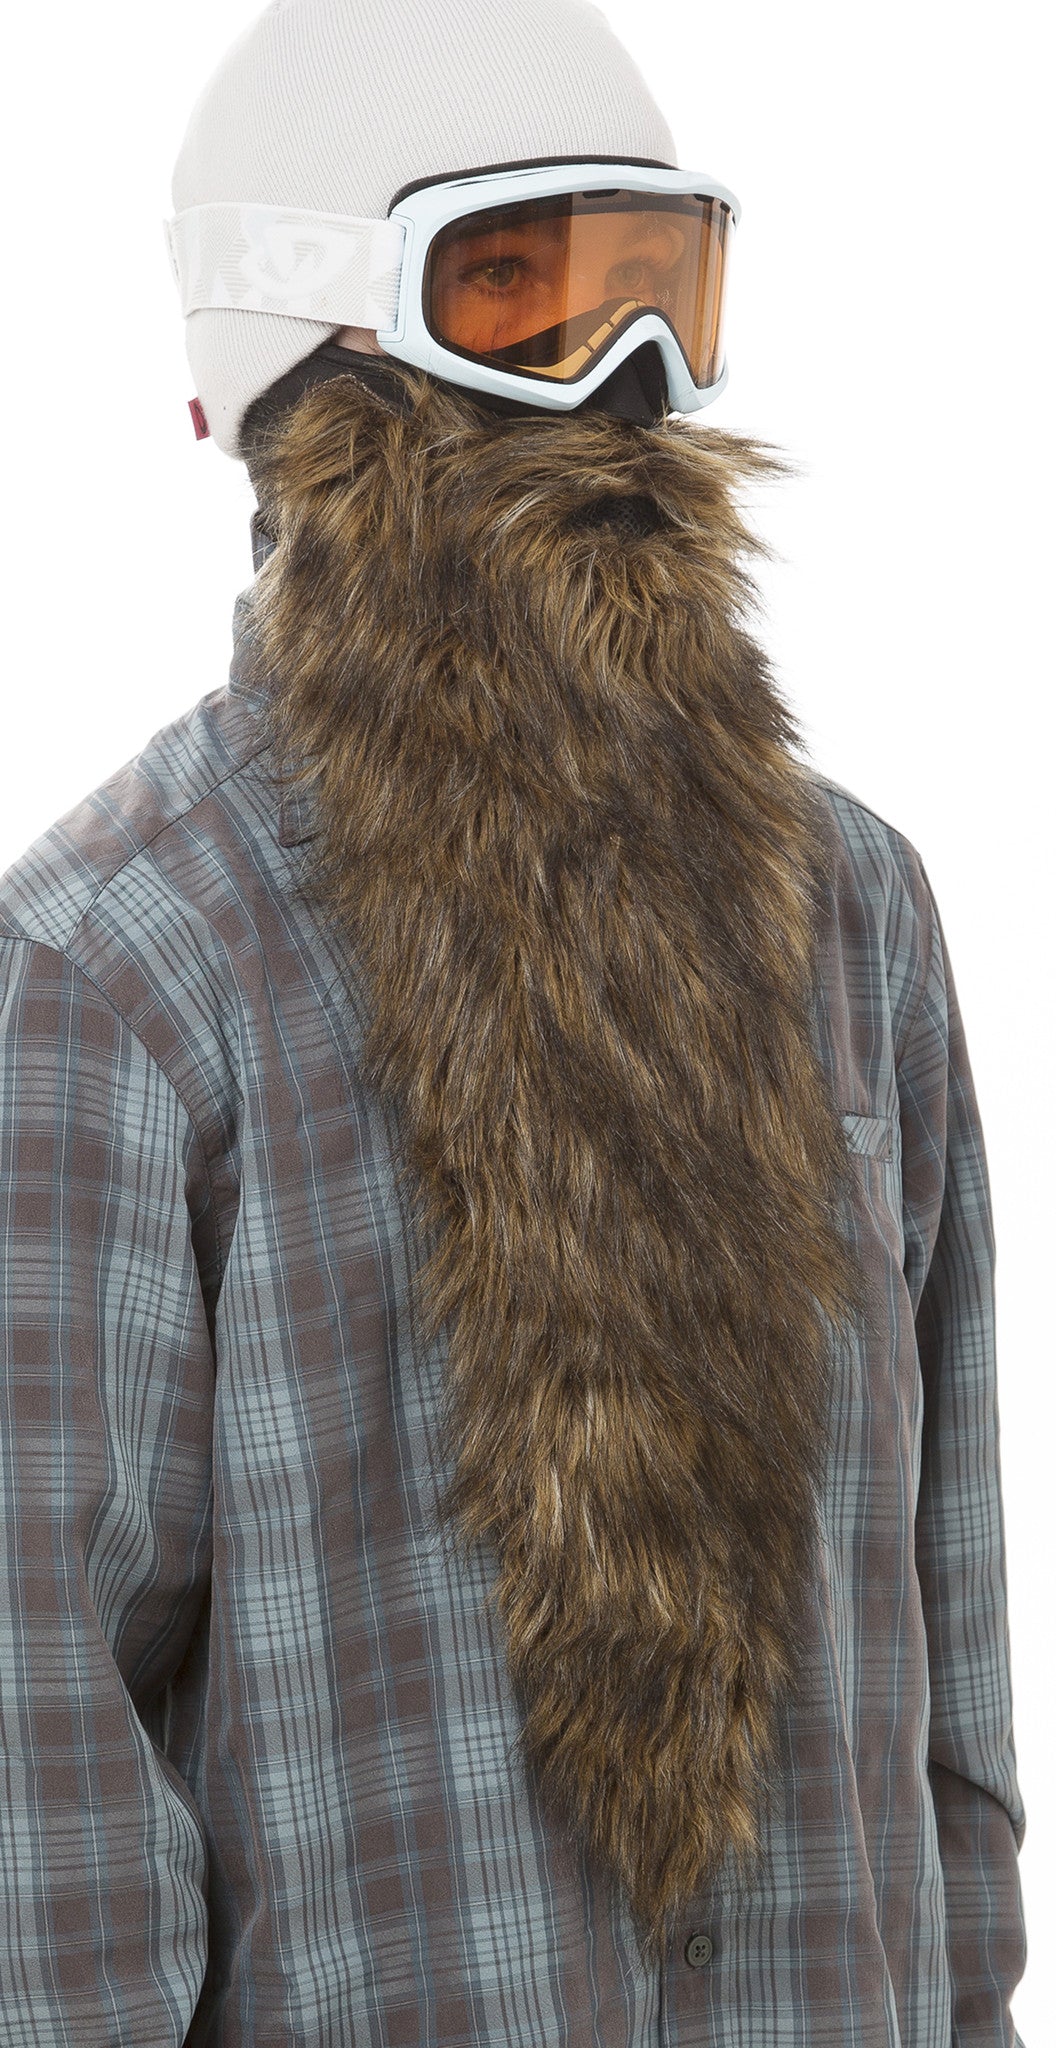 Beardski Big Country Skimask